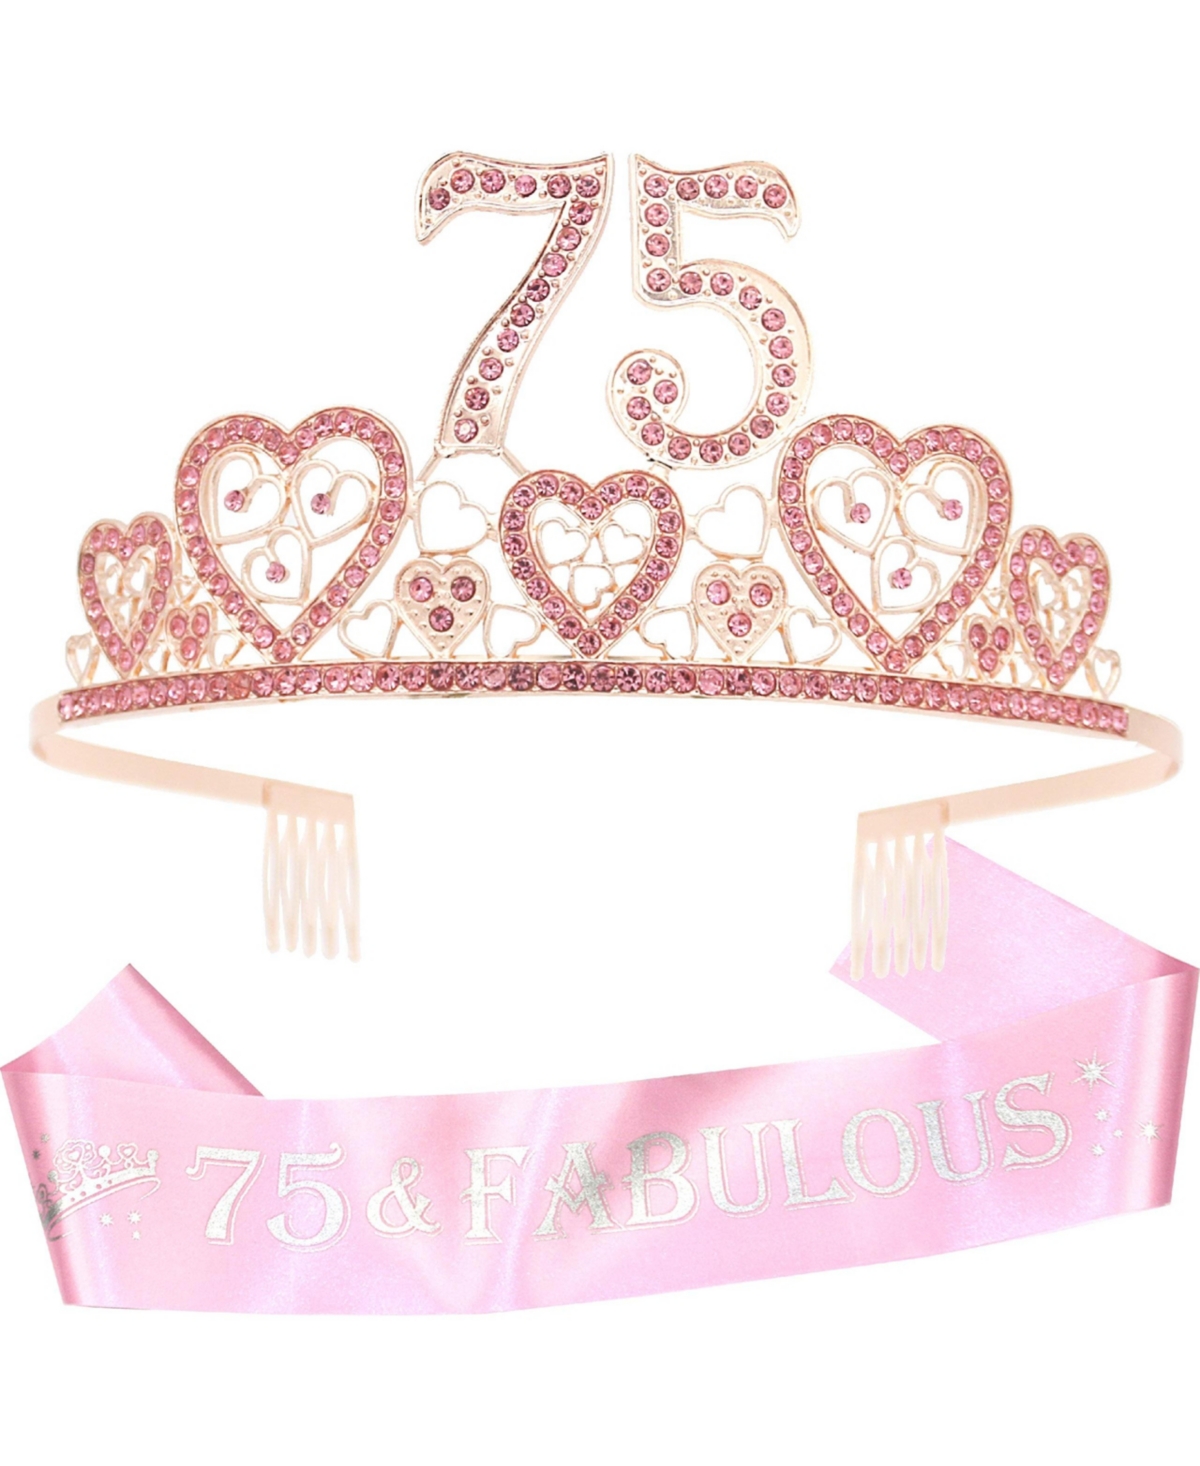 VeryMerryMakering 75th Birthday Sash and Tiara for Women - Fabulous Glitter Sash + Hearts Rhinestone Premium Metal Tiara for Her, 75th Birthday Gifts